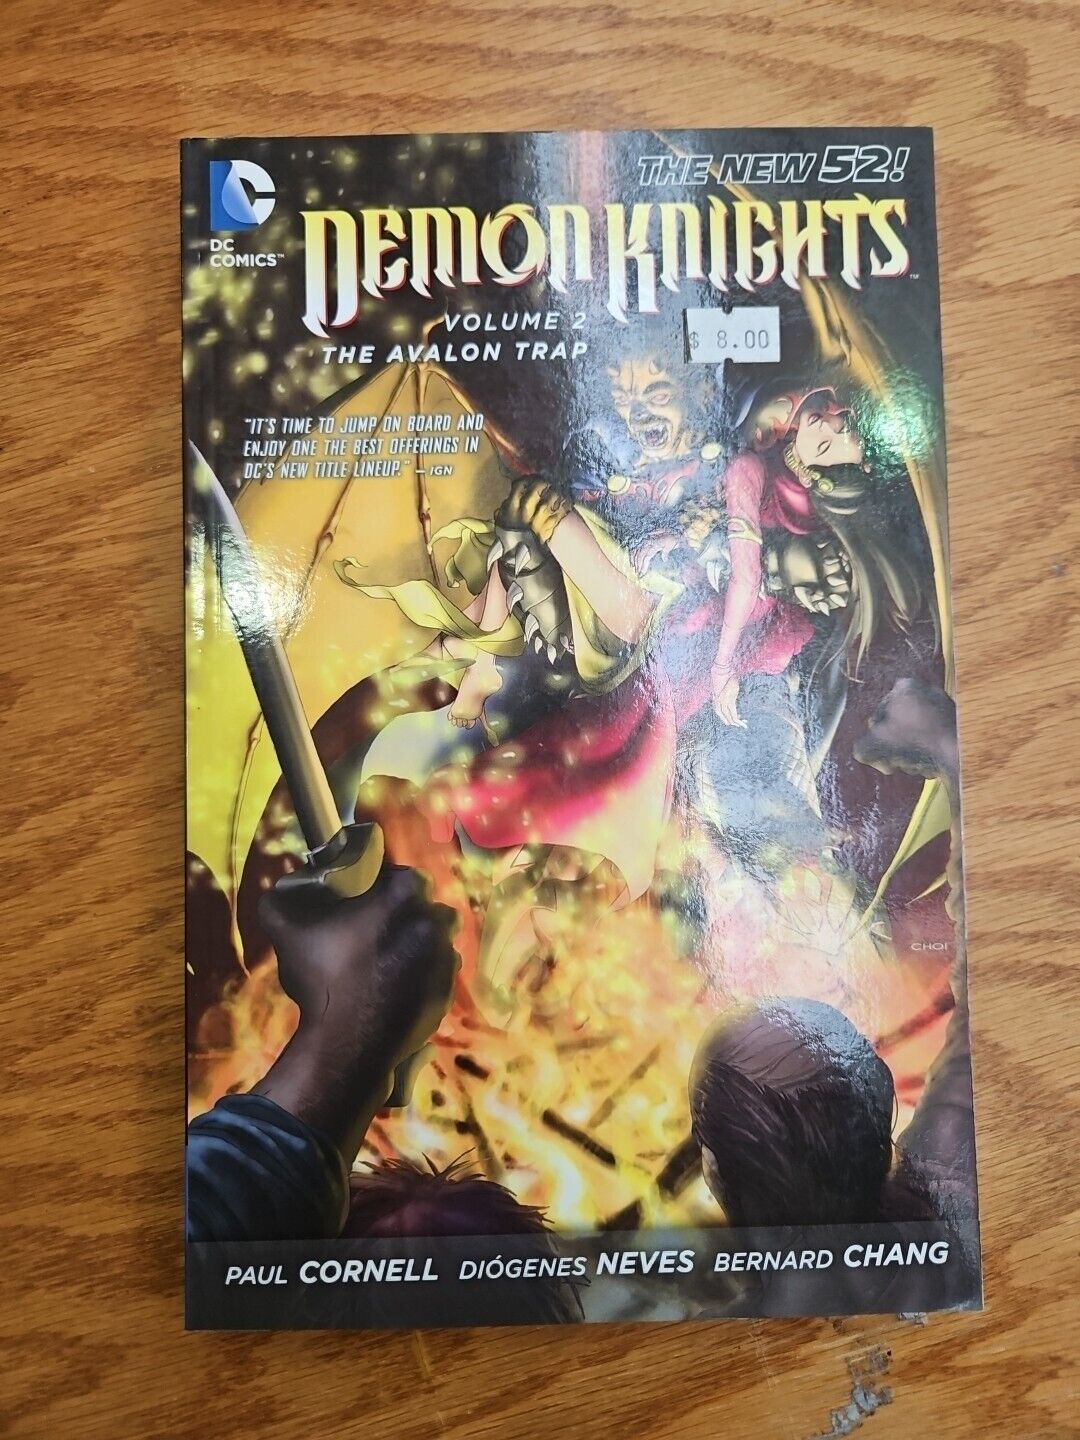 Demon Knights #2 (DC Comics July 2013)